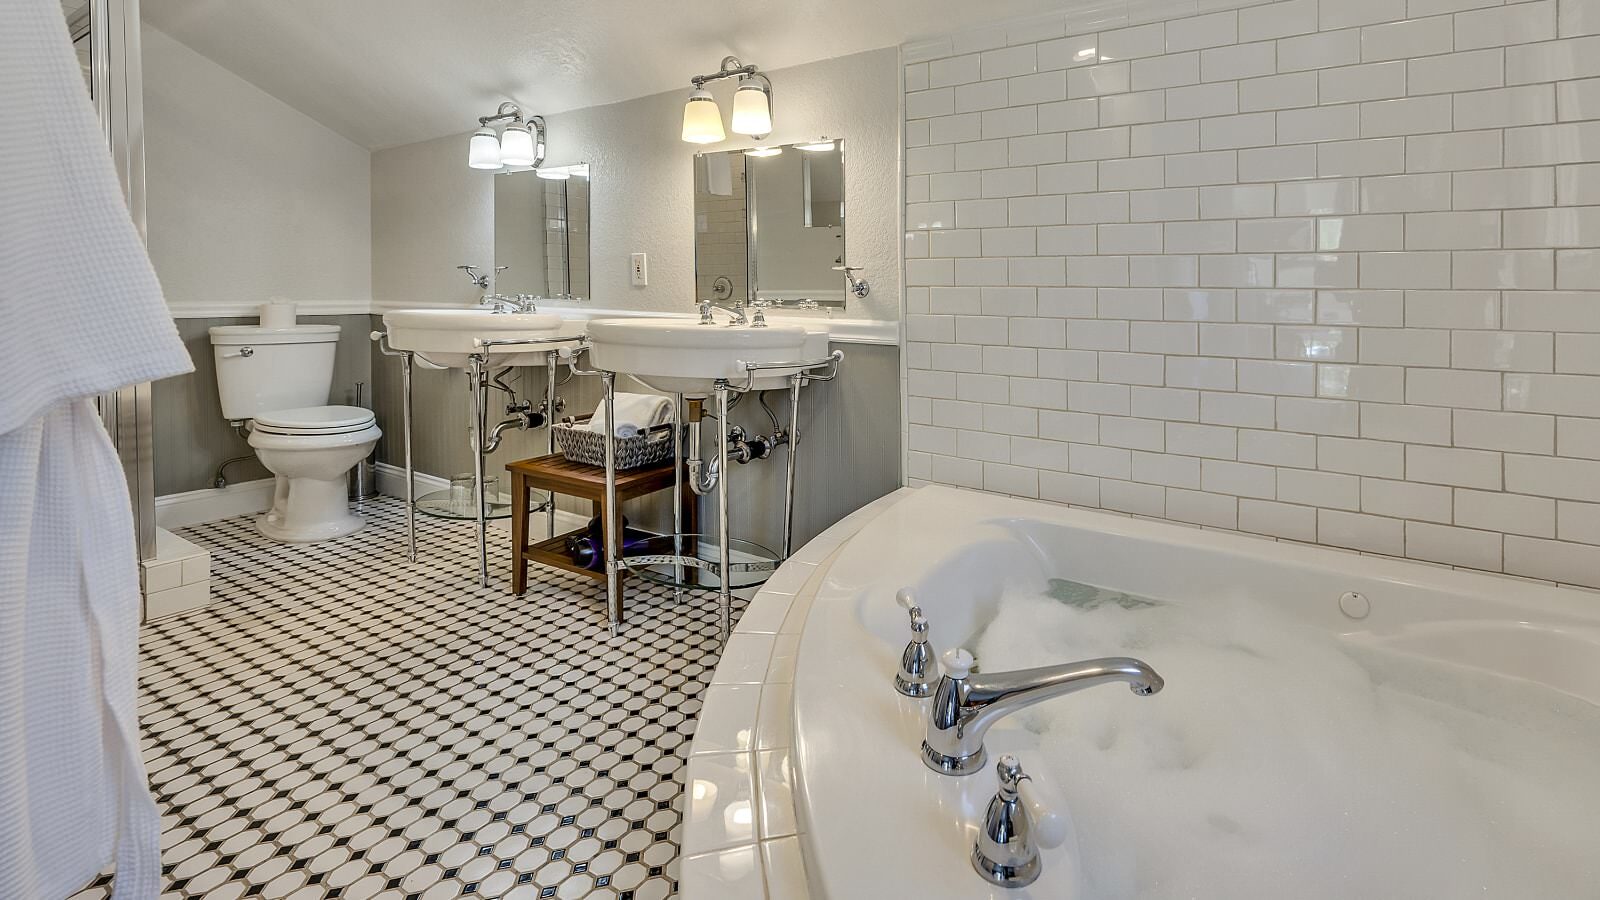 Bathroom with white walls, light gray wainscotting, black and white tiled floor, white toilet, double white pedestal sinks, and soaker tub